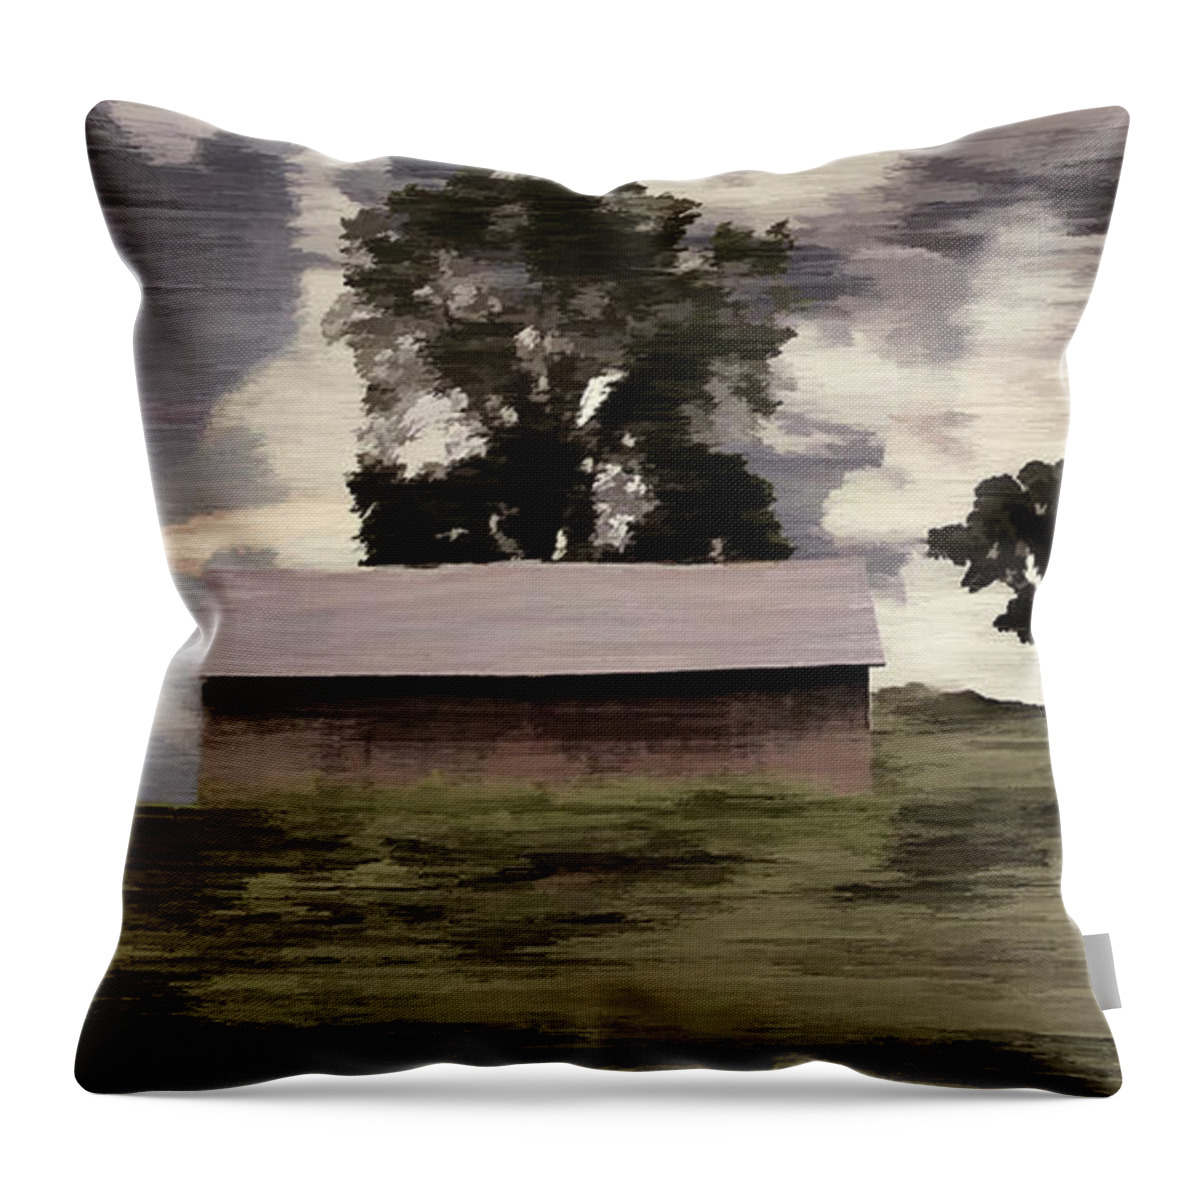 Digital Art Throw Pillow featuring the photograph Barn II A Digital Painting by David Yocum